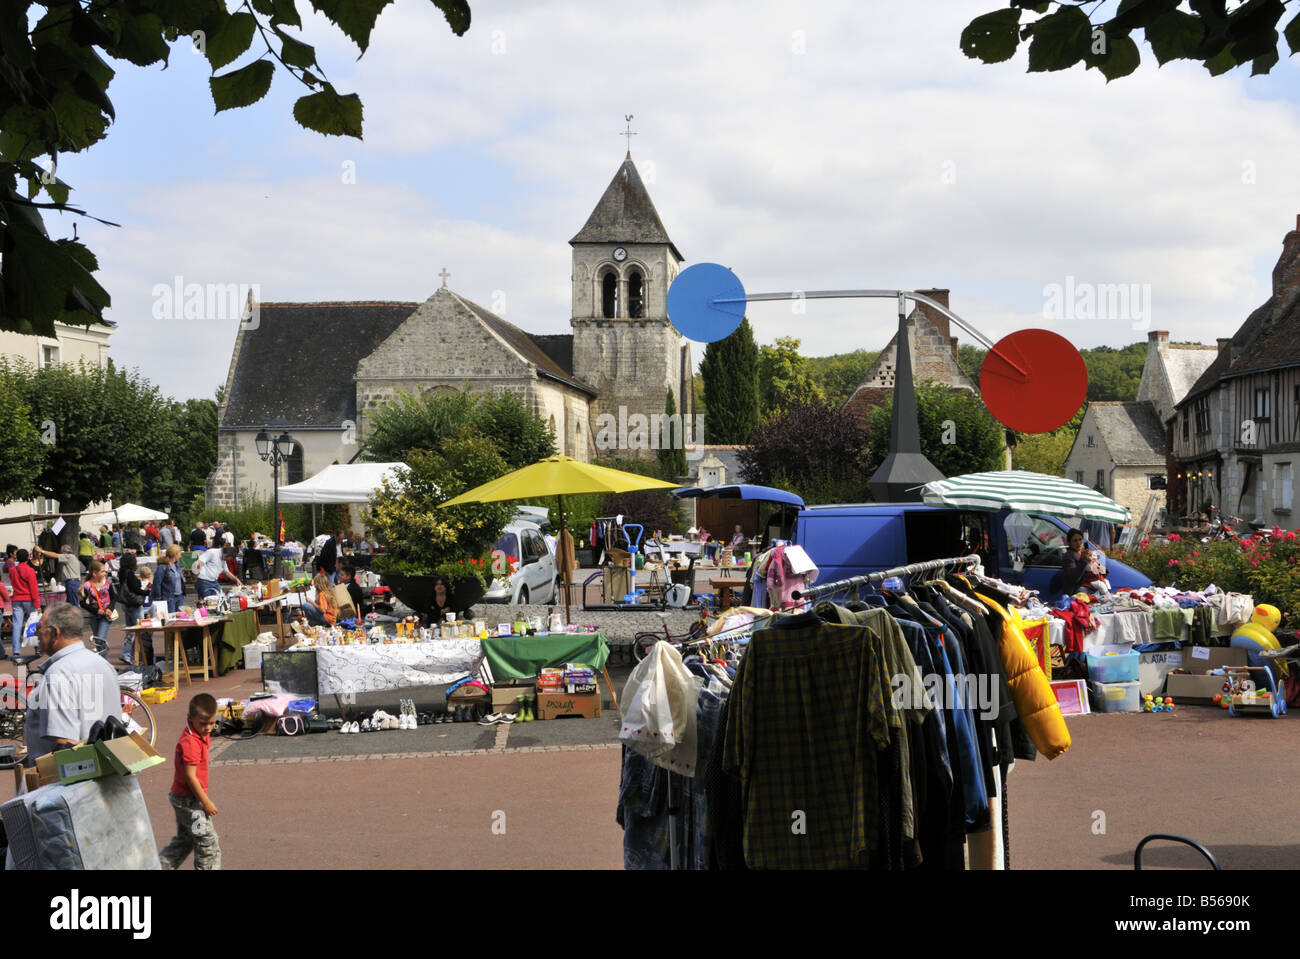 Sunday bric a brac market at Sache France Stock Photo